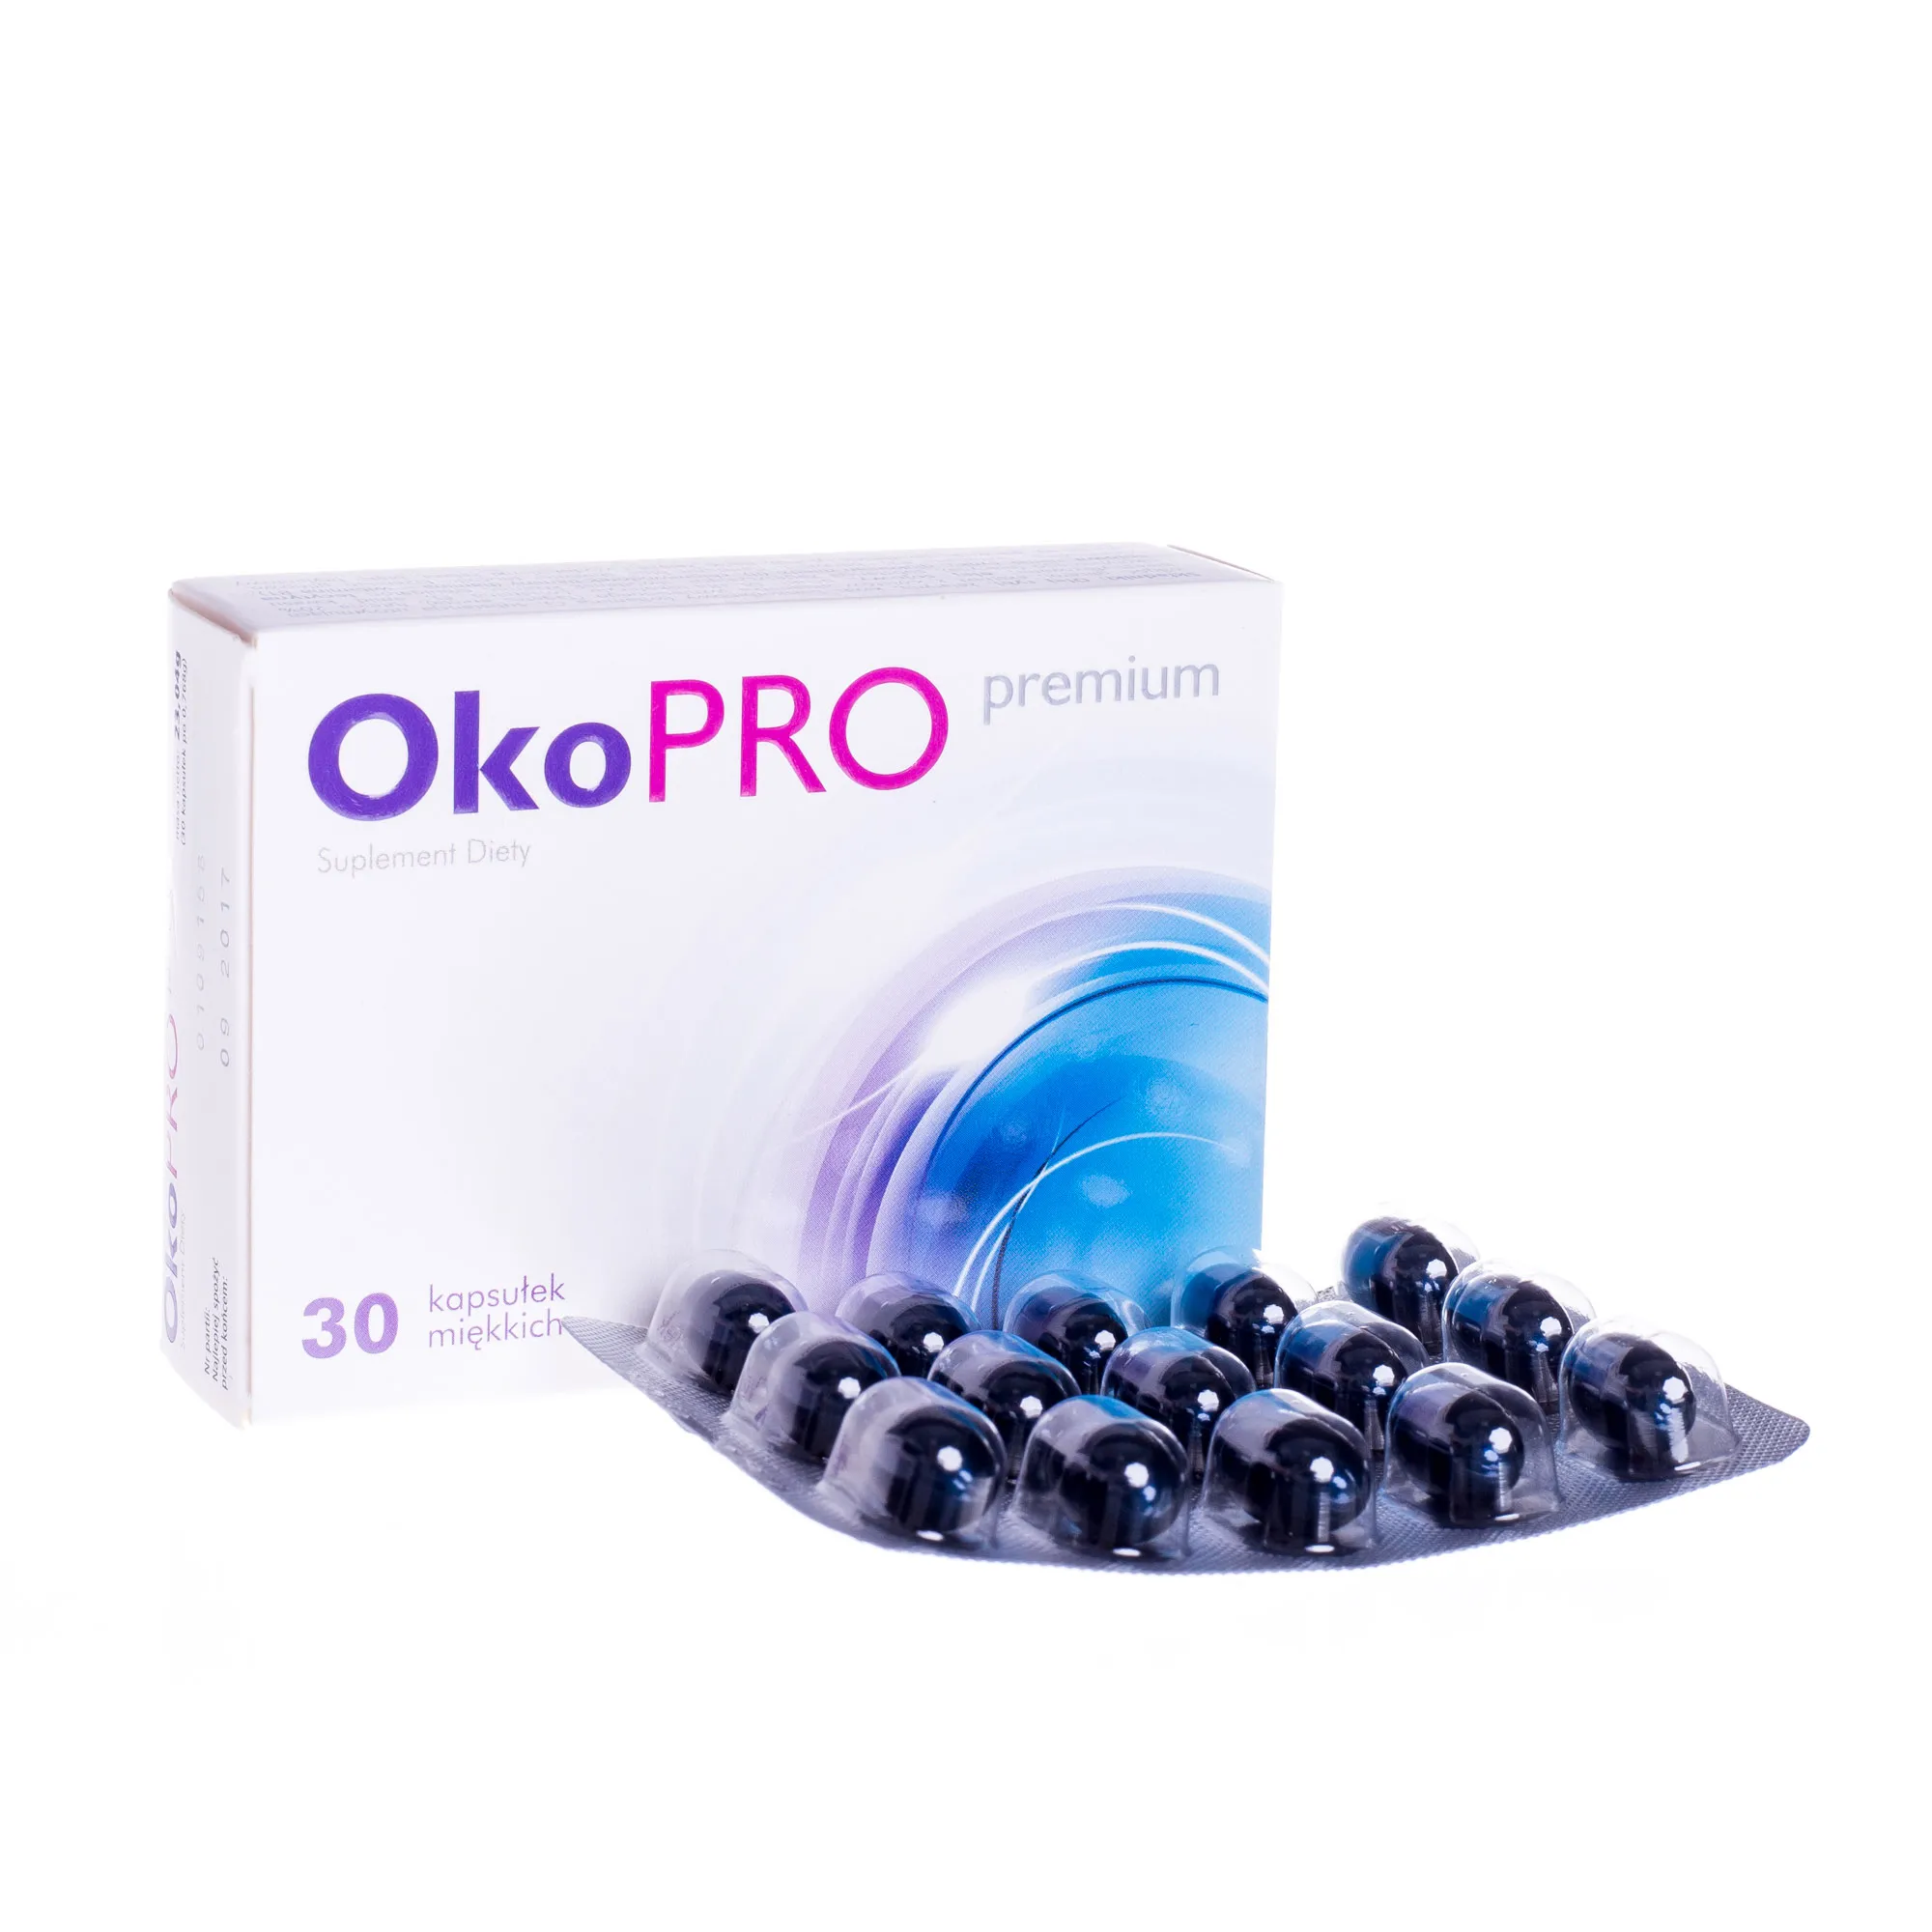 OkoPro Premium, 30 kapsułek miękkich 